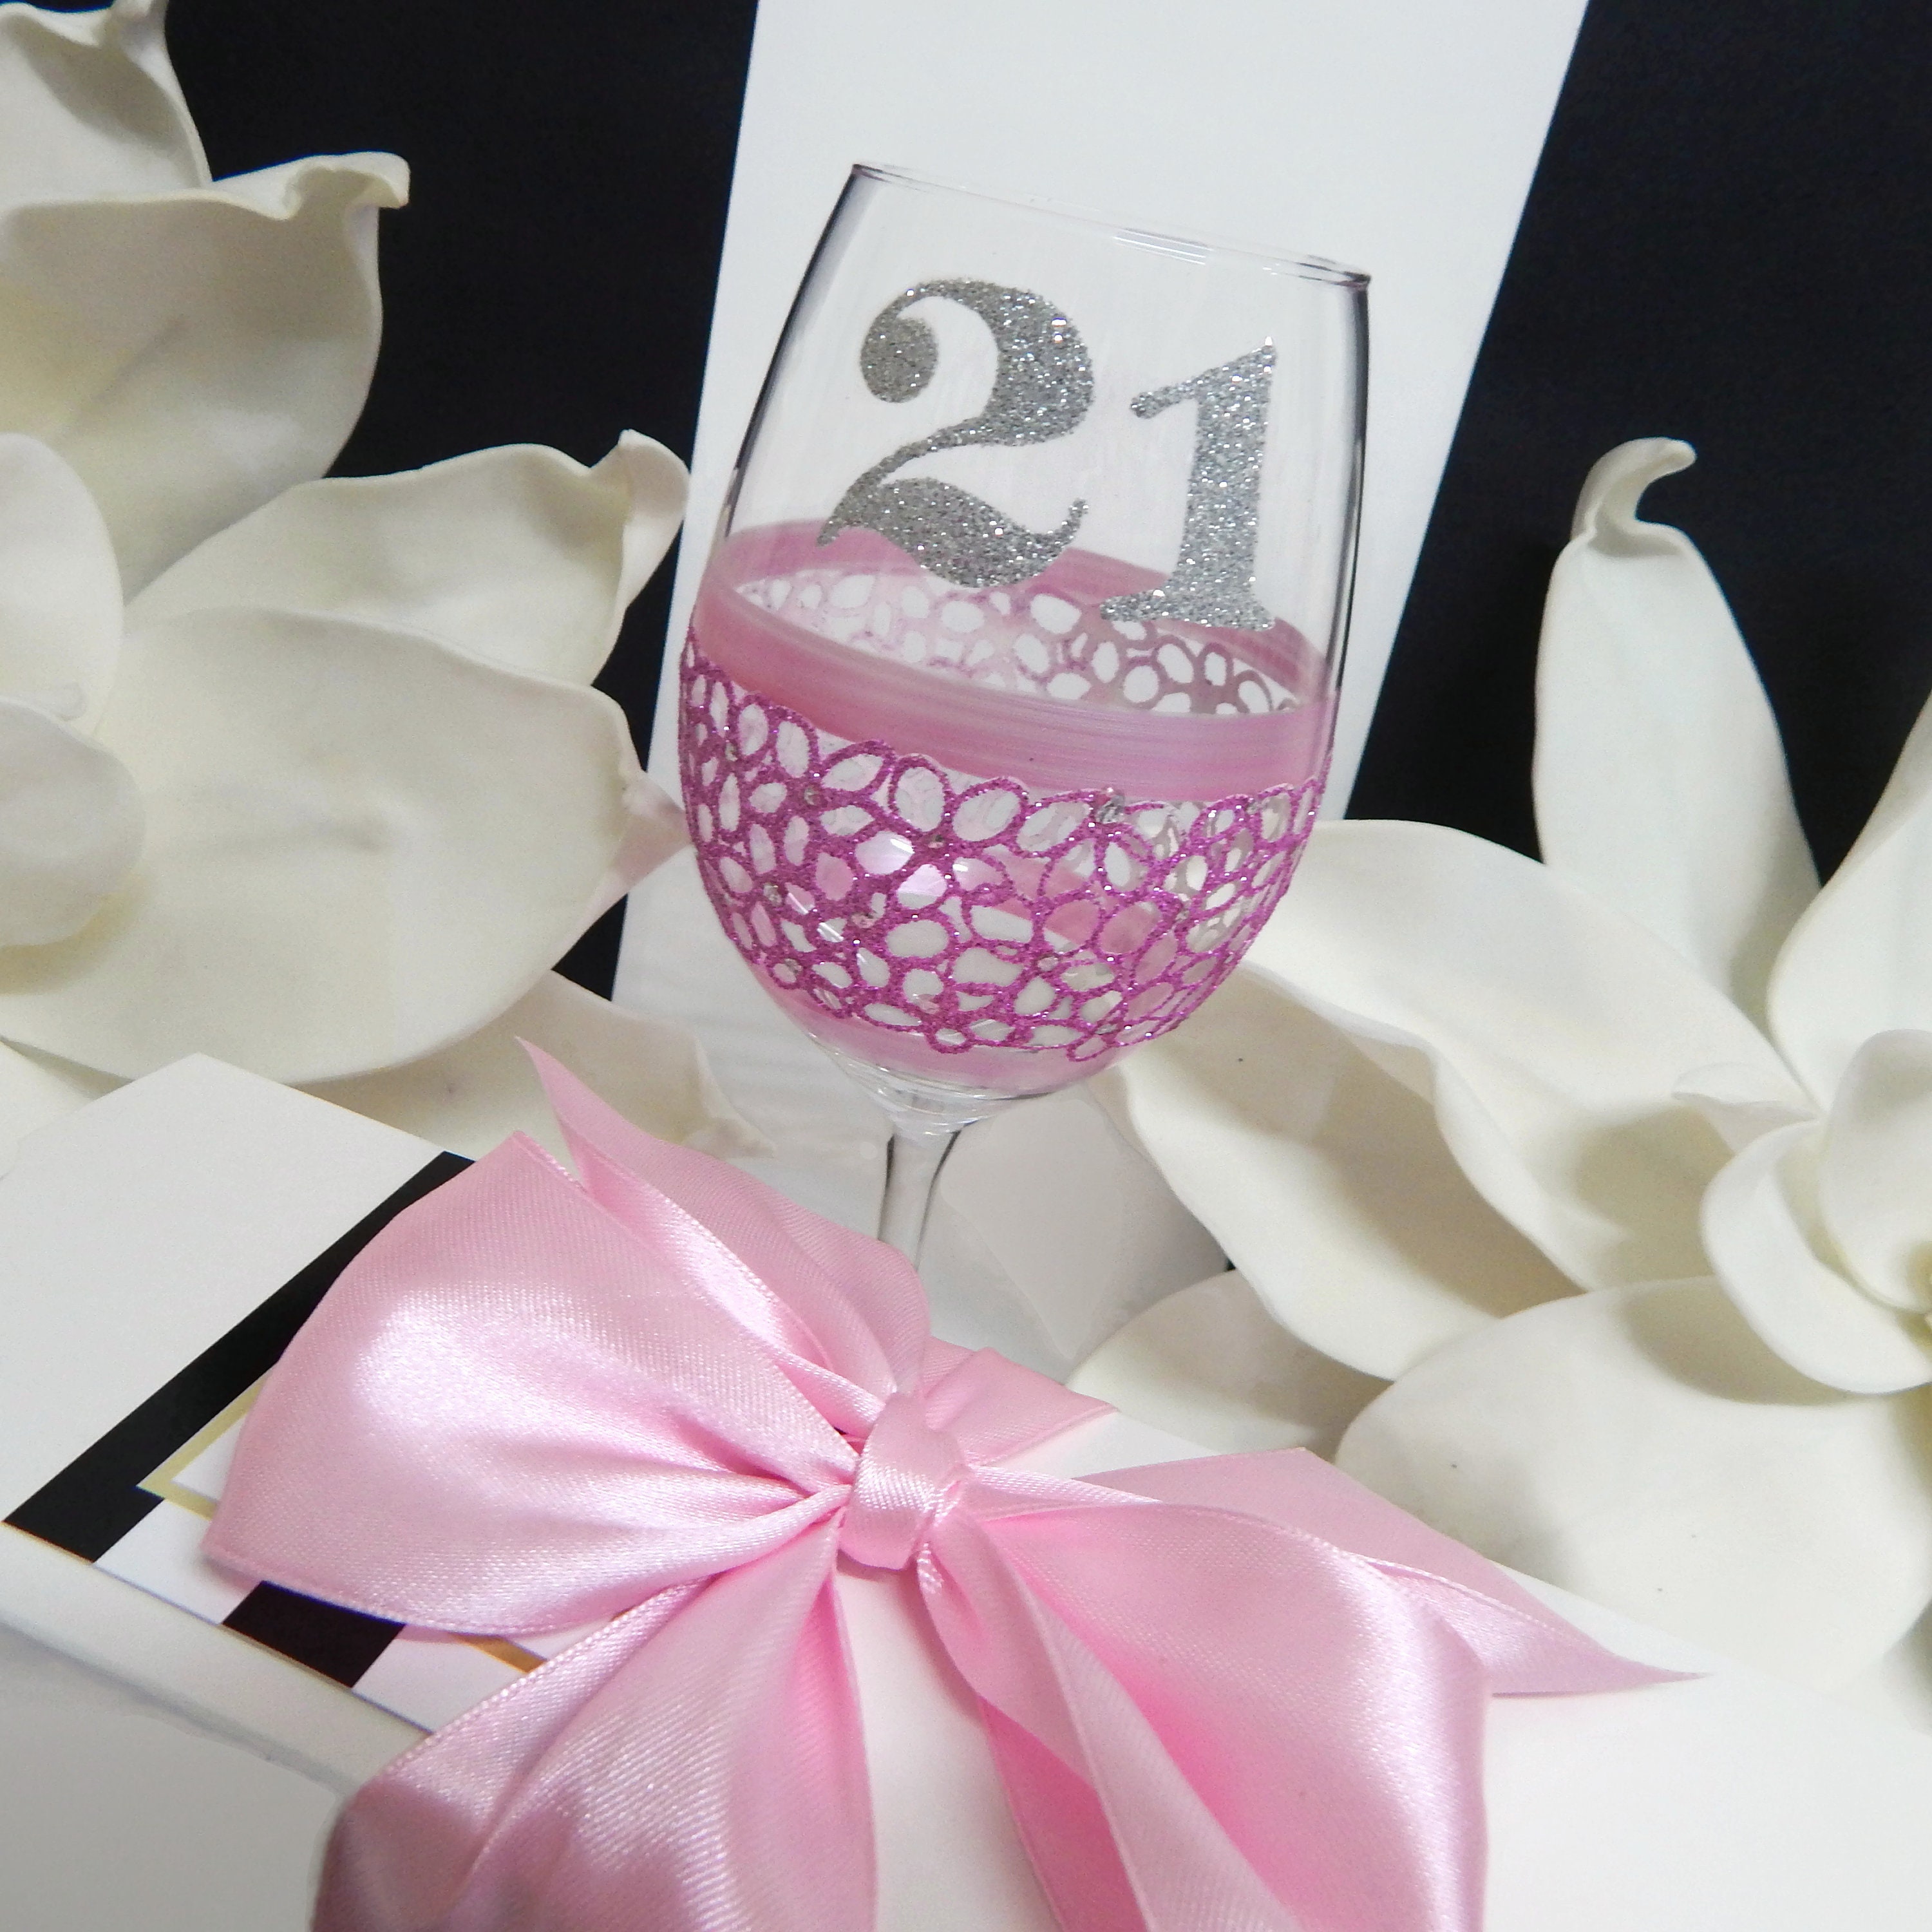 RorAem Wine Glasses 21st Birthday Gifts for Her - Unique Wine